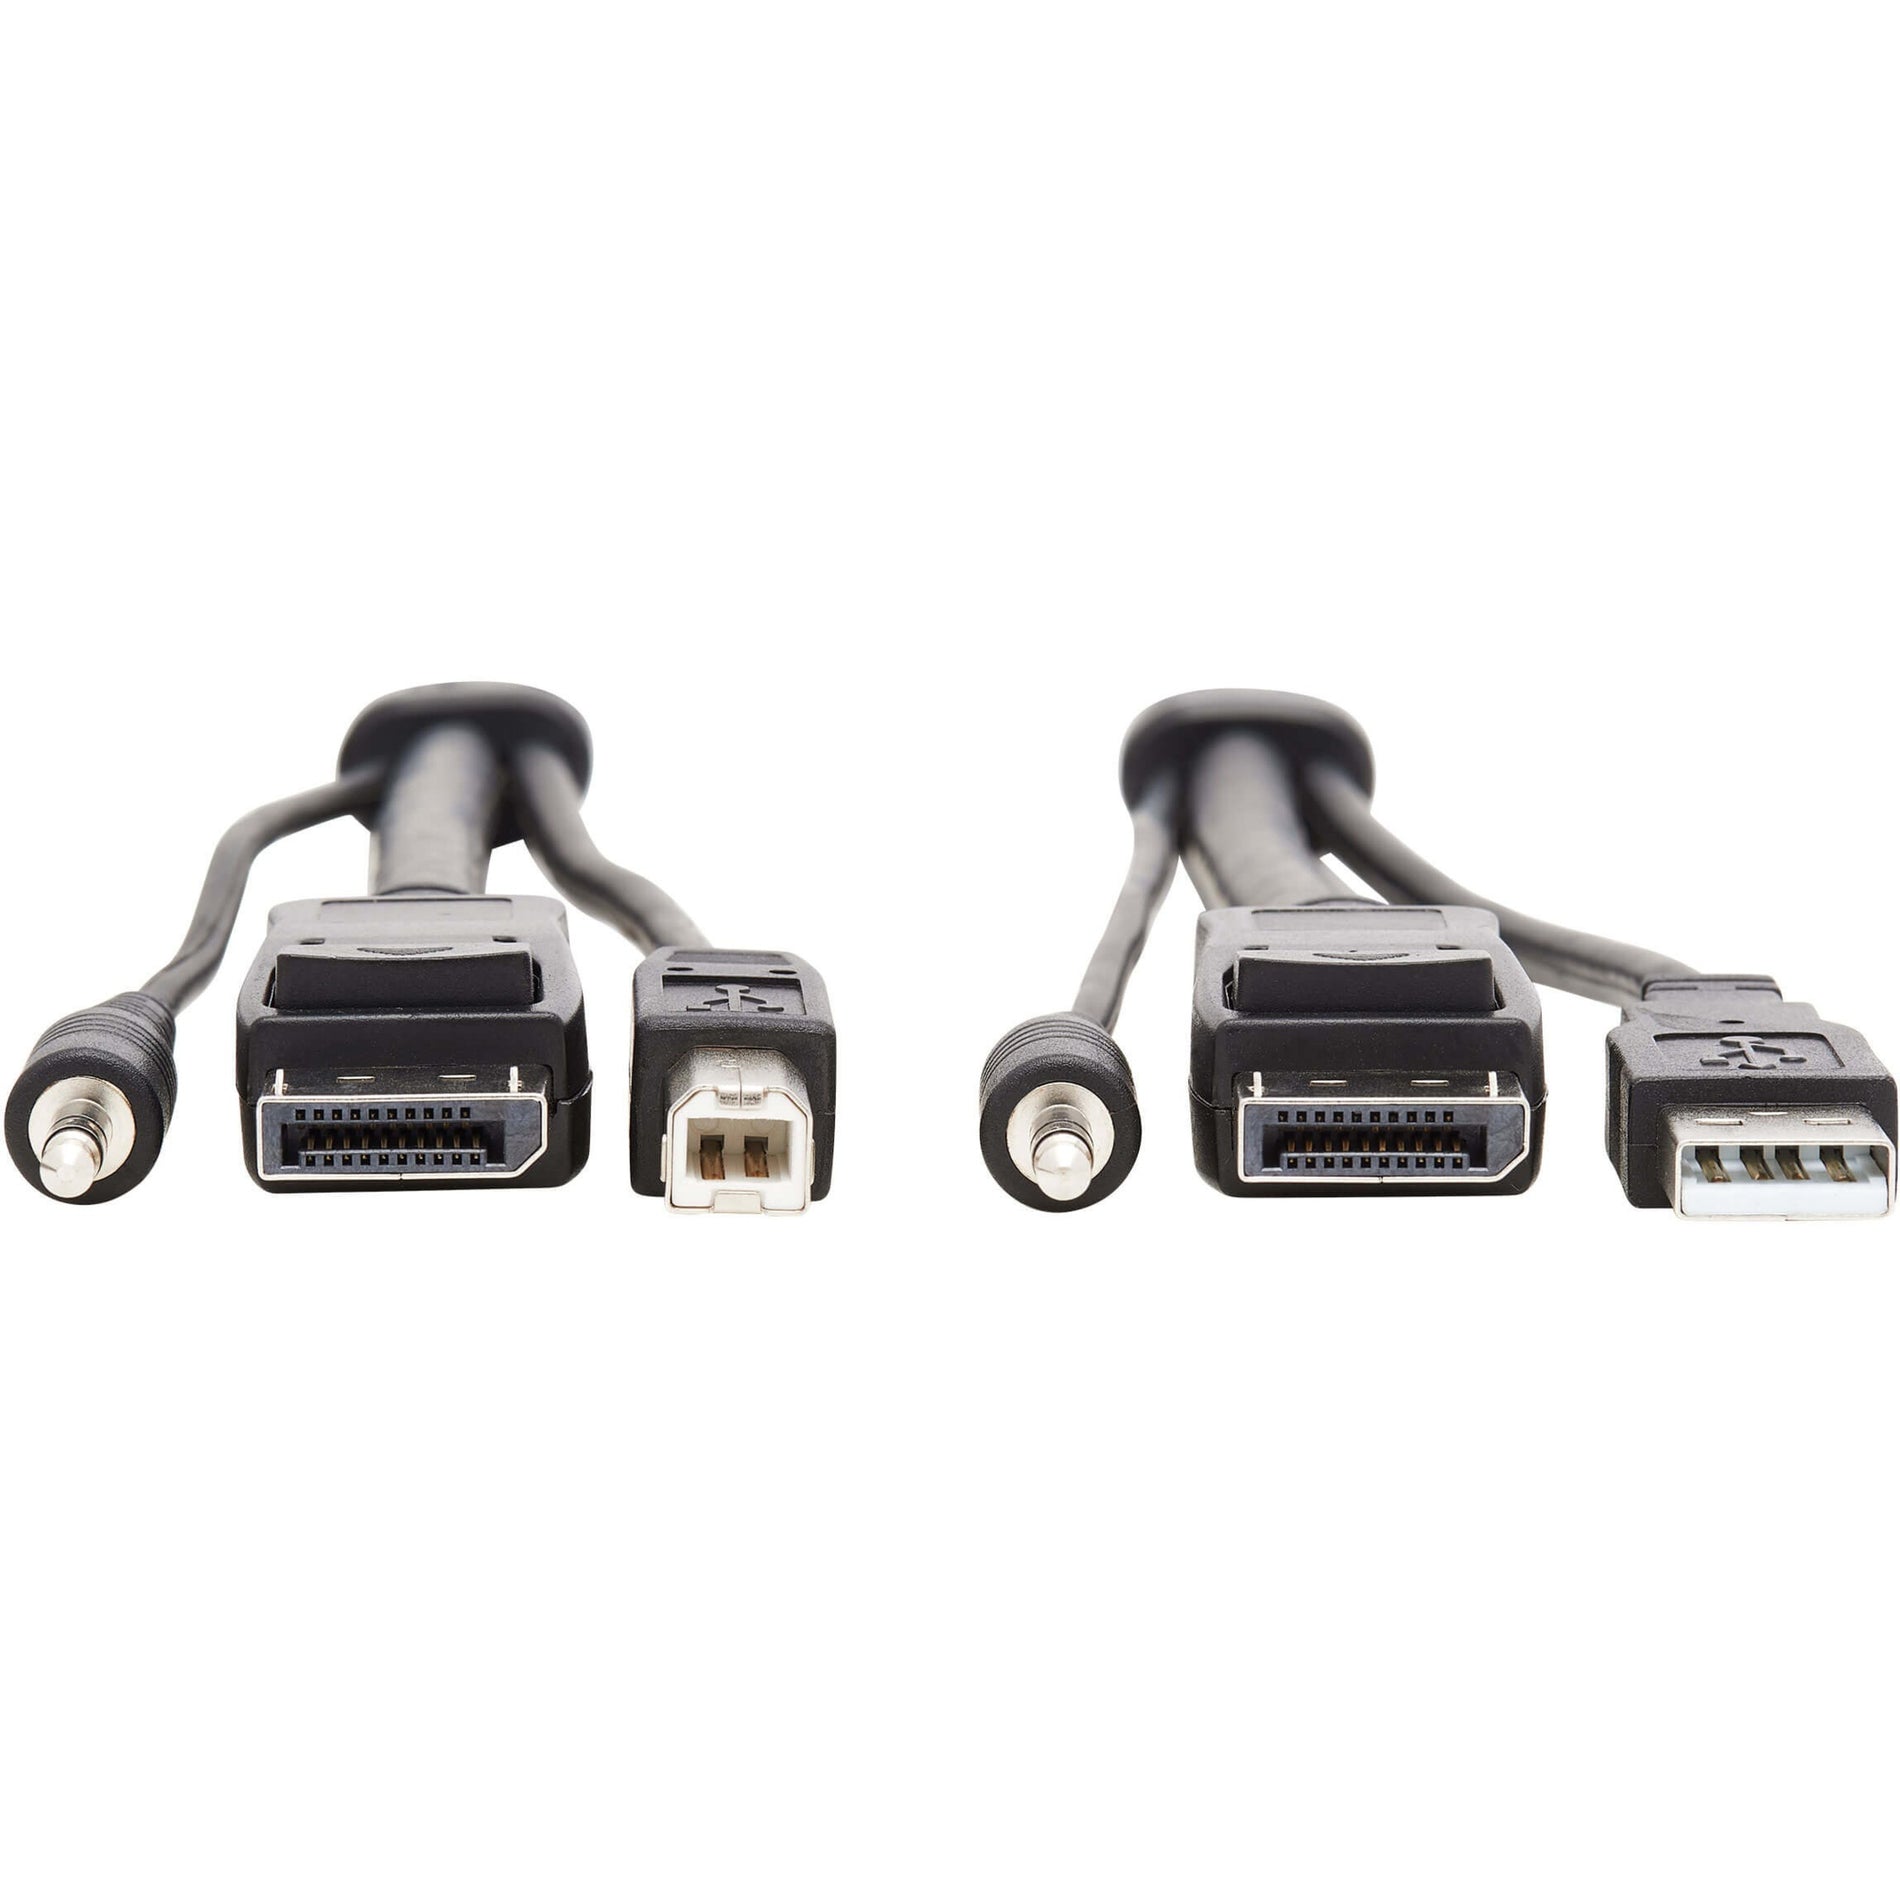 Tripp Lite von Eaton P783-010 KVM-Kabel 4K USB 10FT 